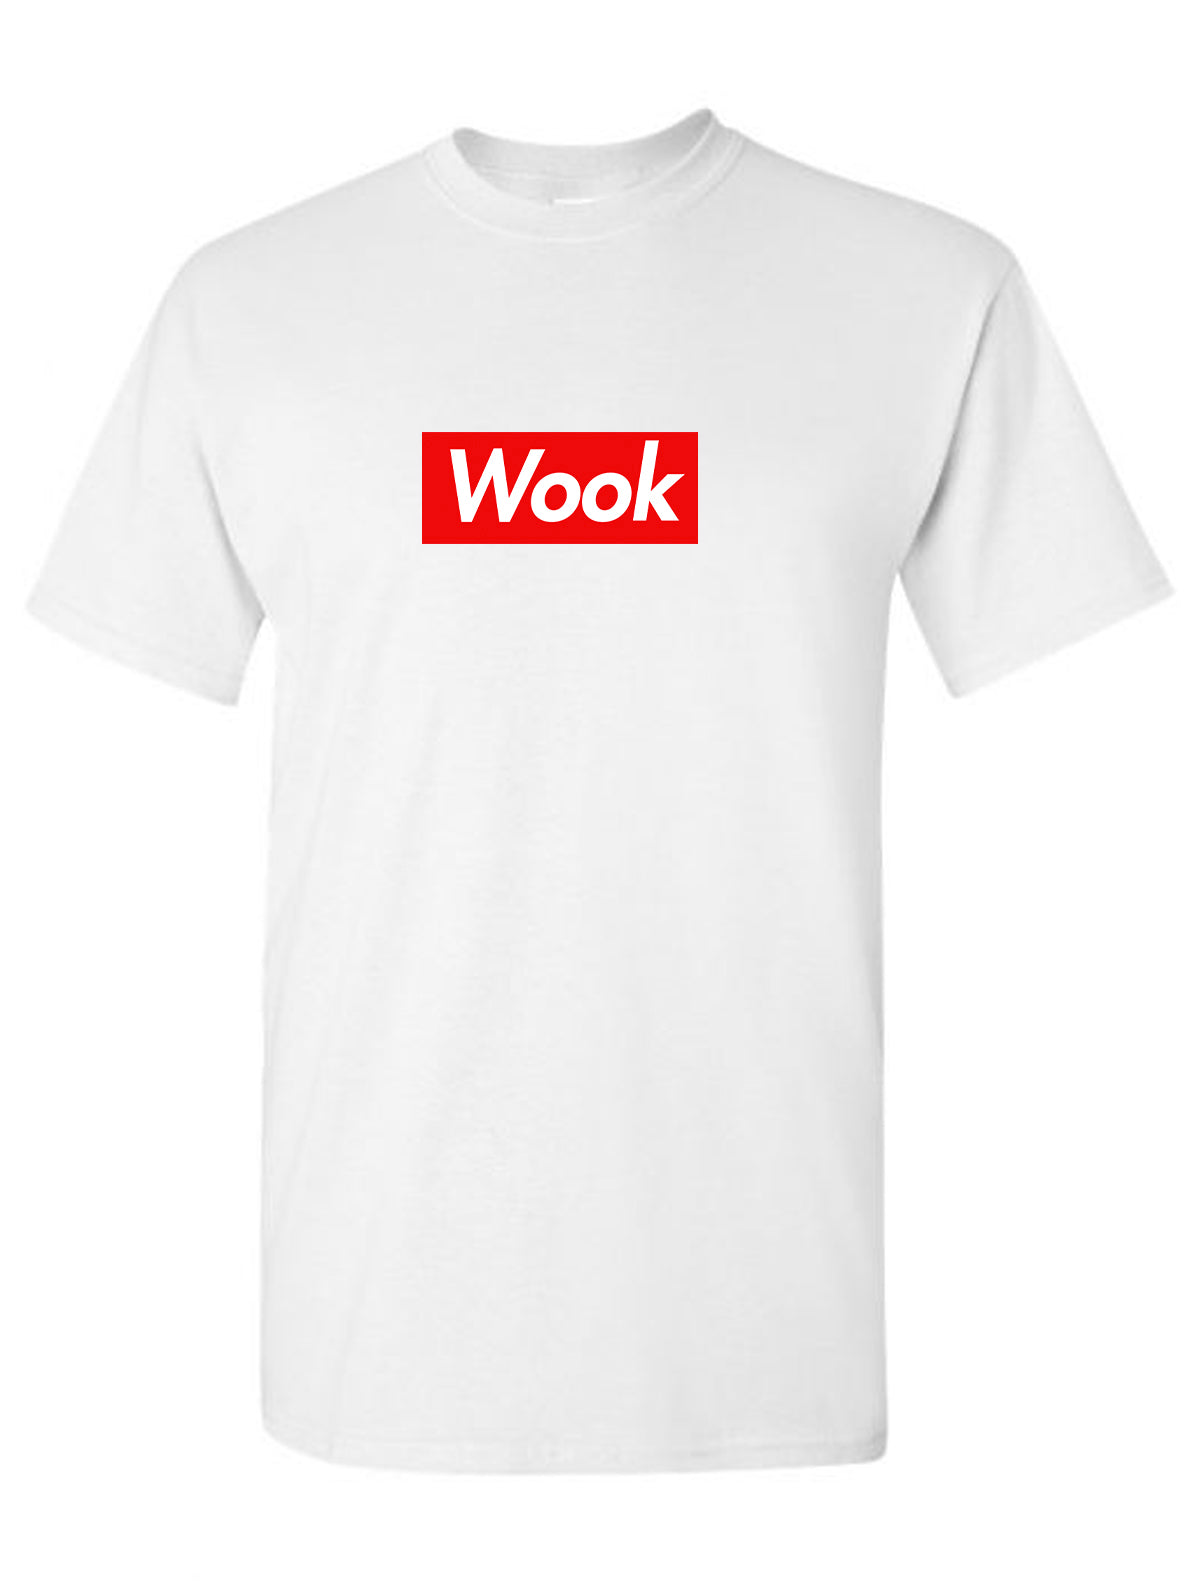 "Wook" Shirts